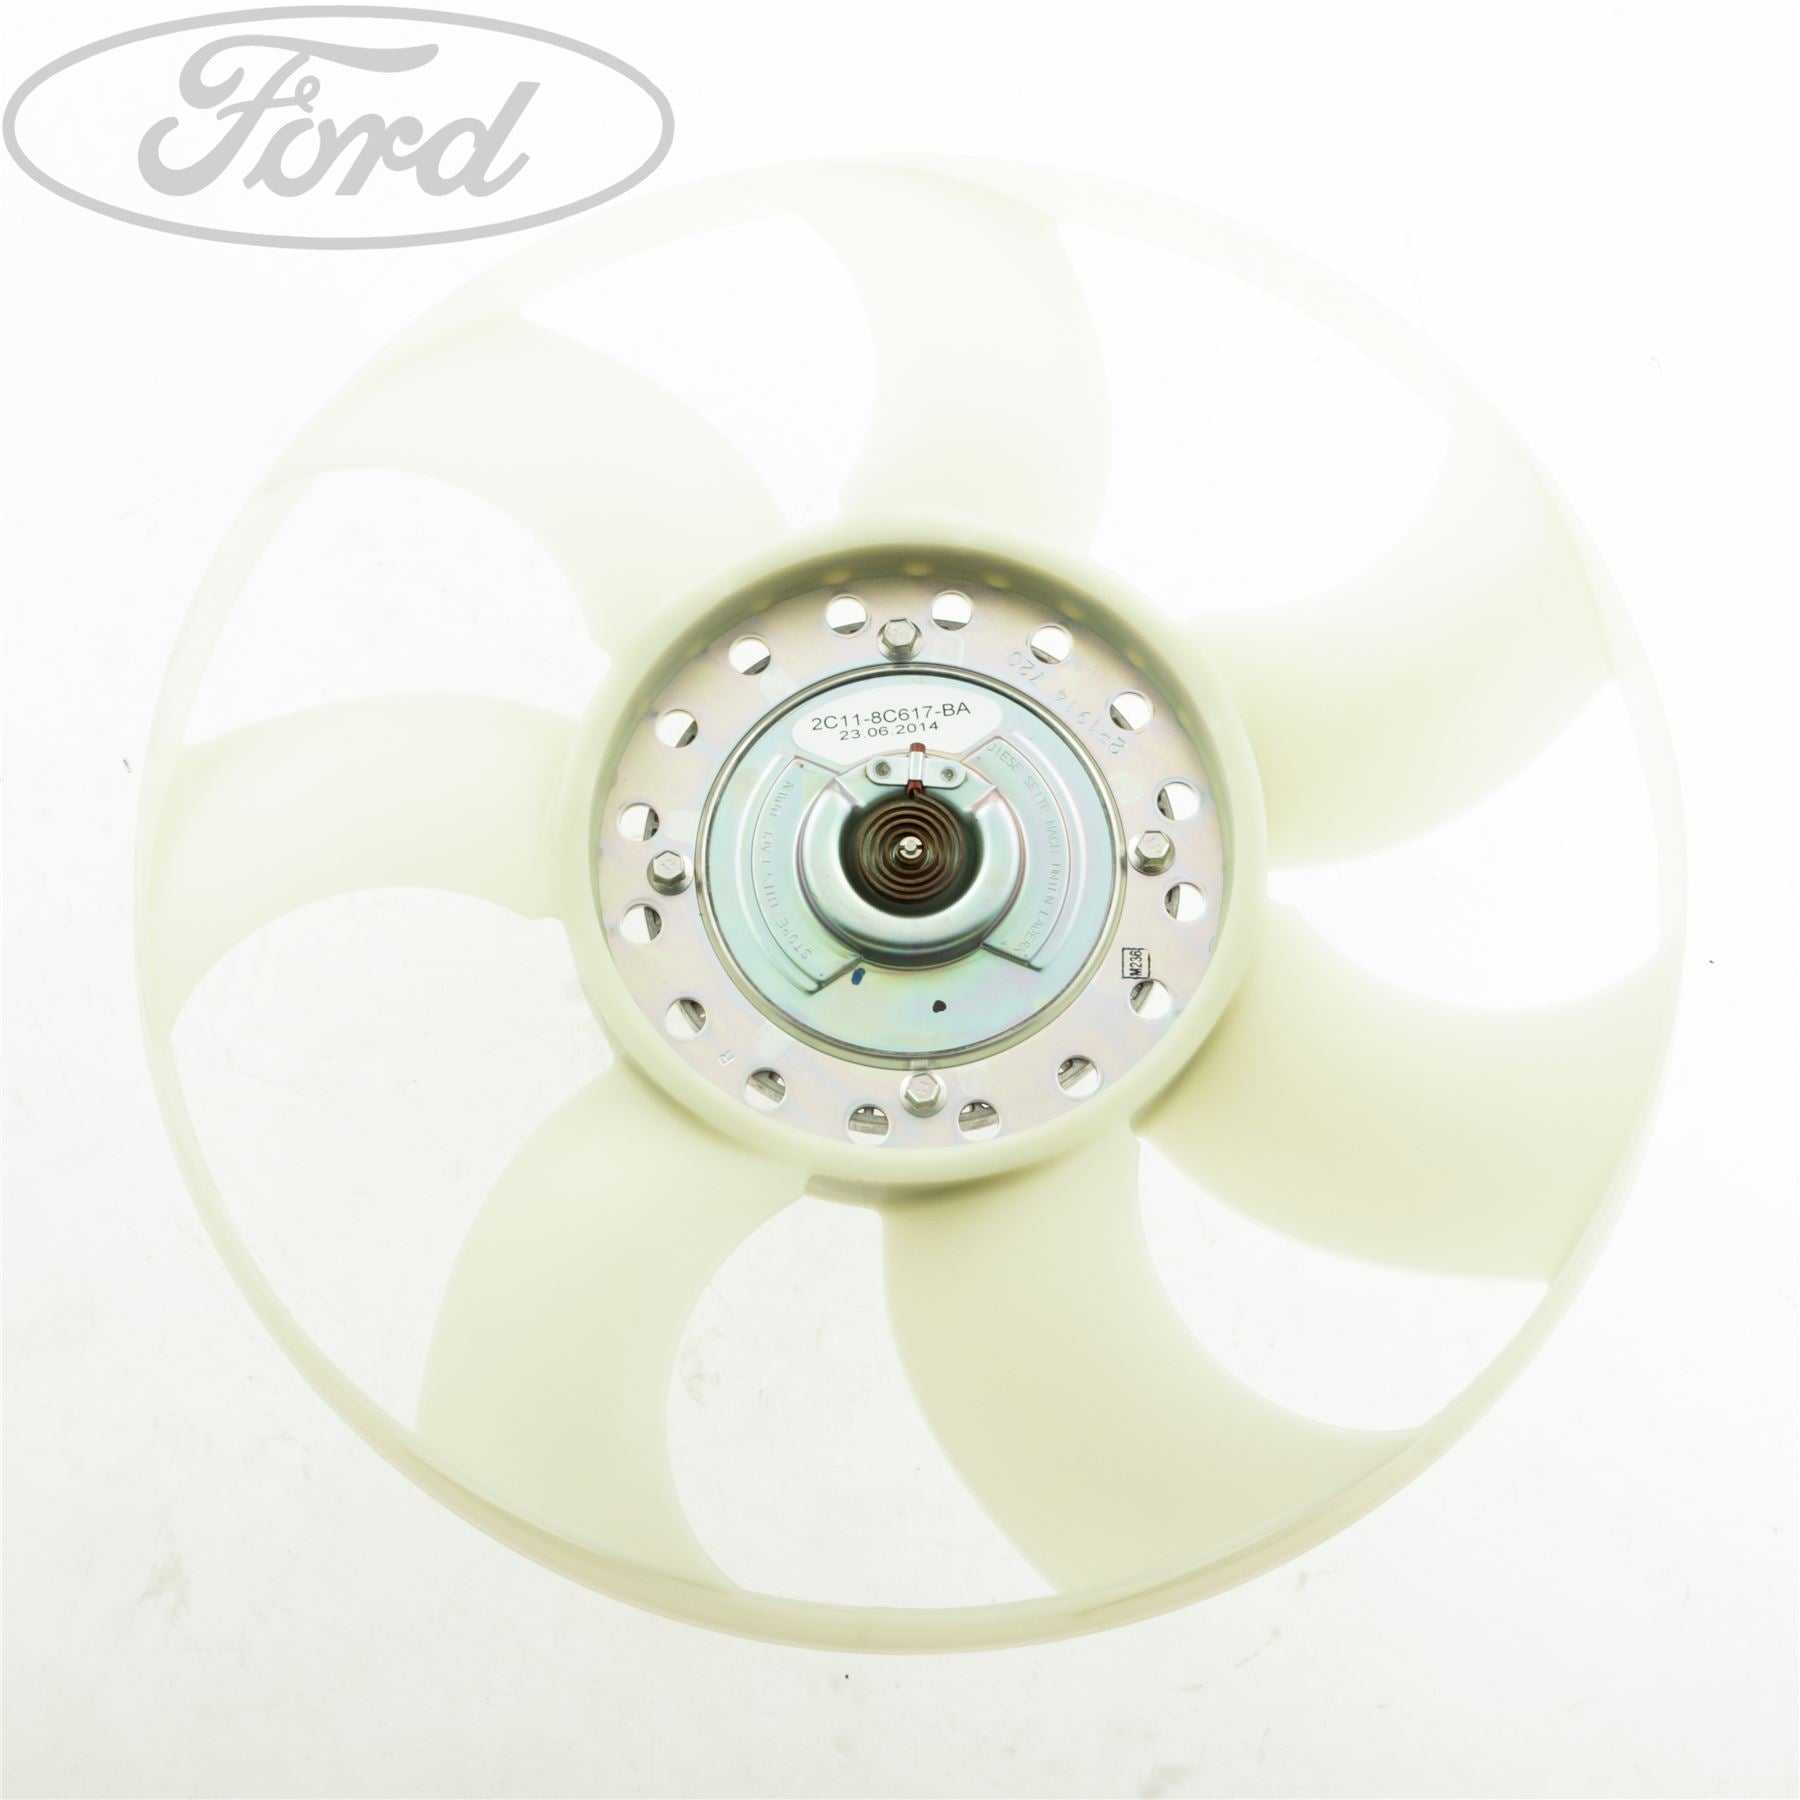 Ford, TRANSIT 2.4 TDCI DURATORQ ENGINE COOLING FAN 2000-2006